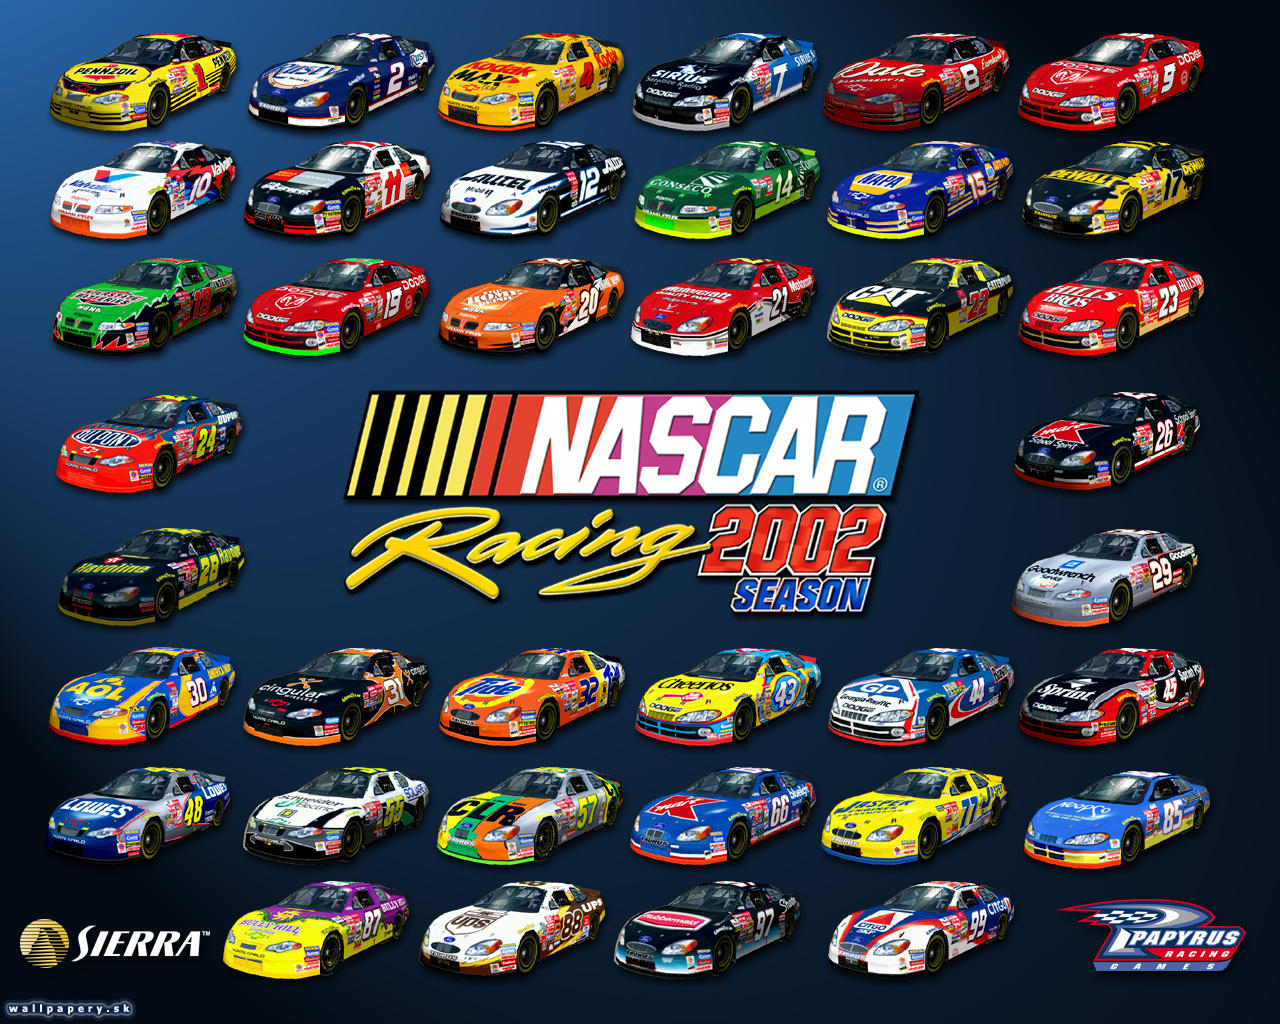 Nascar Racing 2002 Season - wallpaper 8